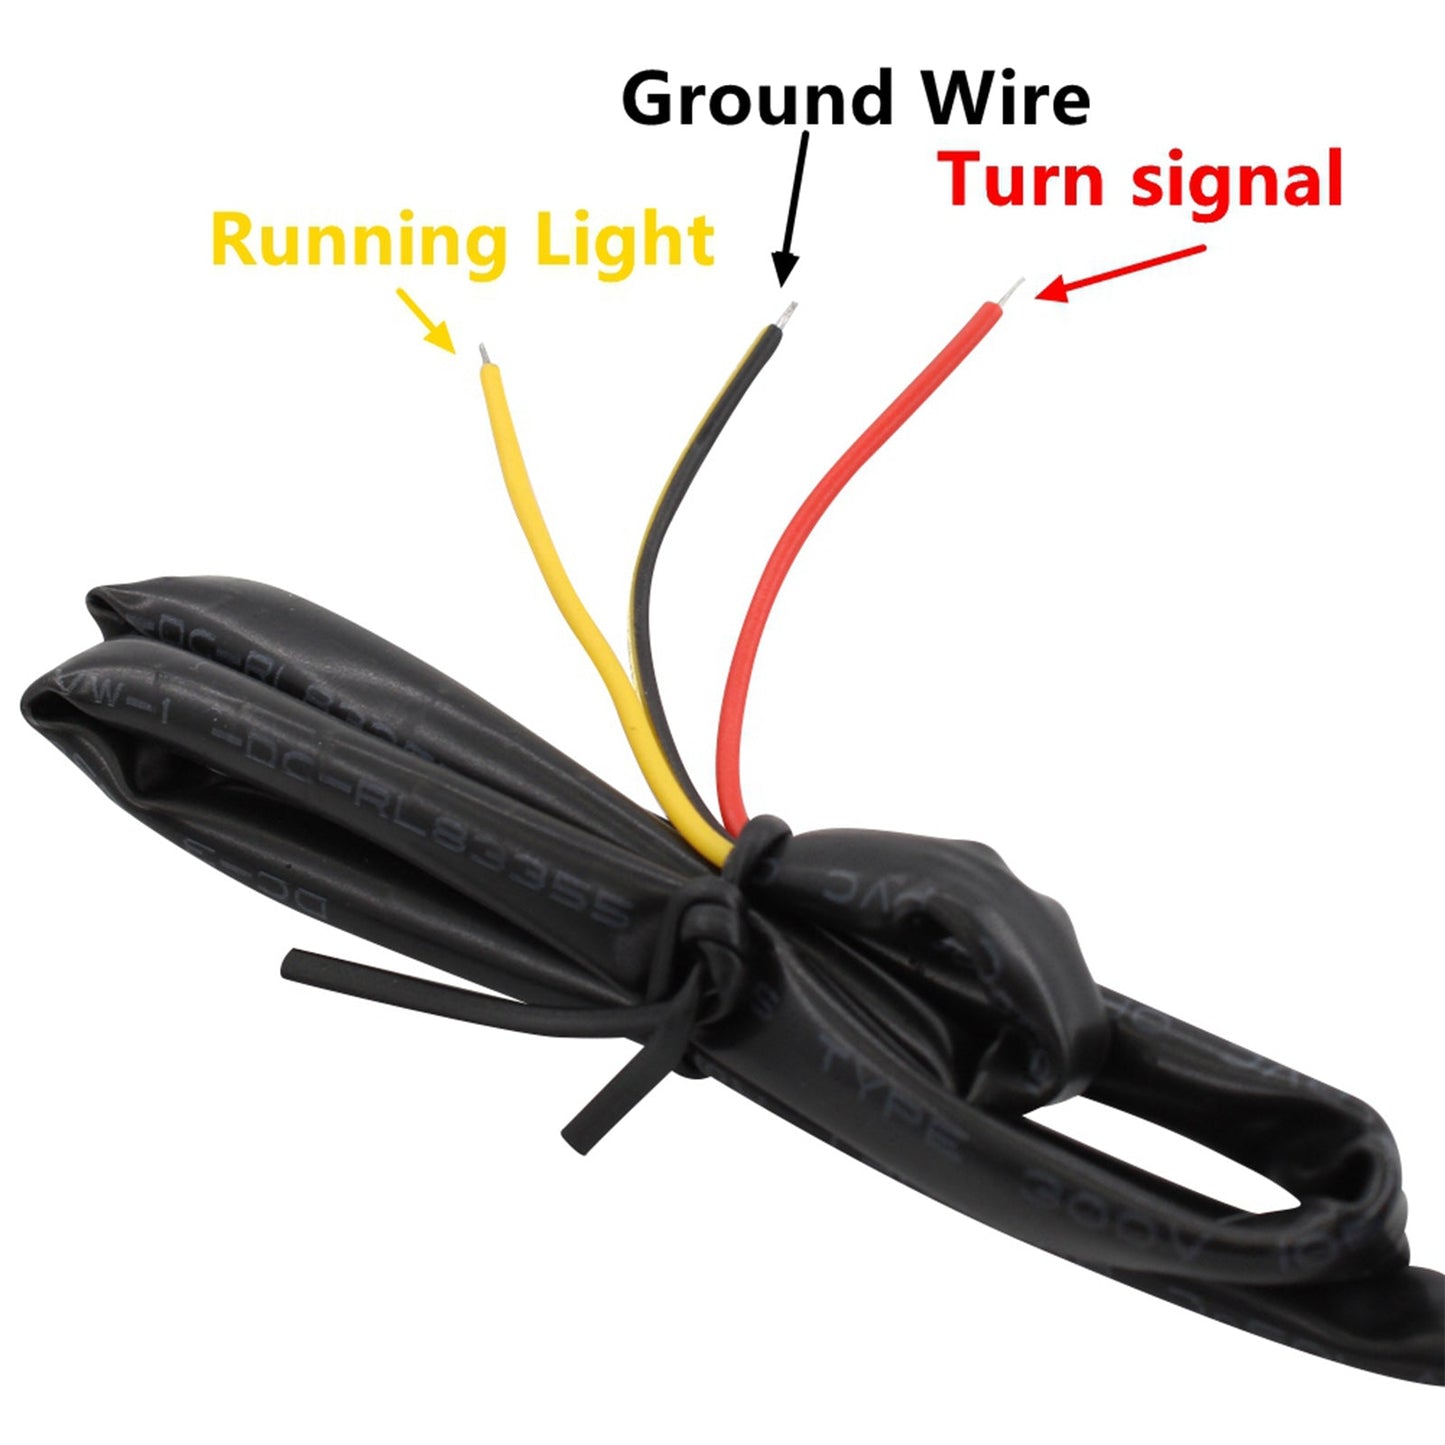 LED Rear Mini E Mark Turn Signal Indicator For Sportster Touring Dyna Black Amber